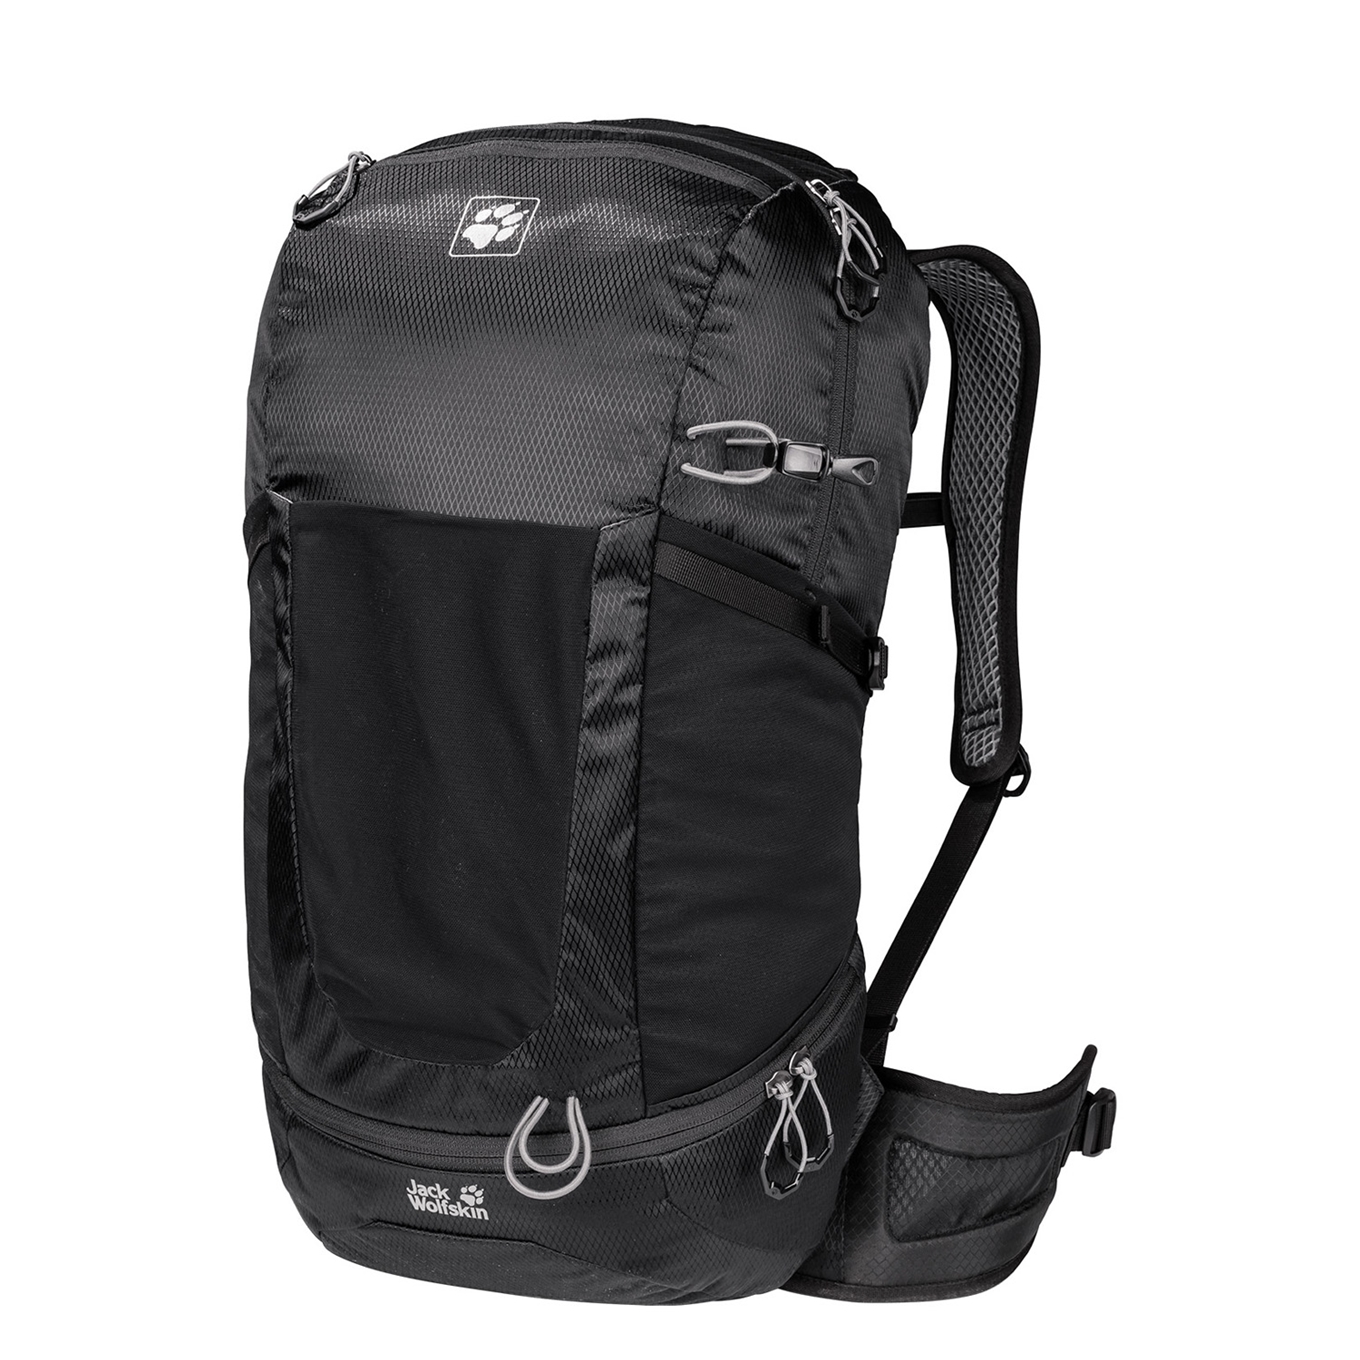 Jack Wolfskin Kingston 30 Pack black backpack